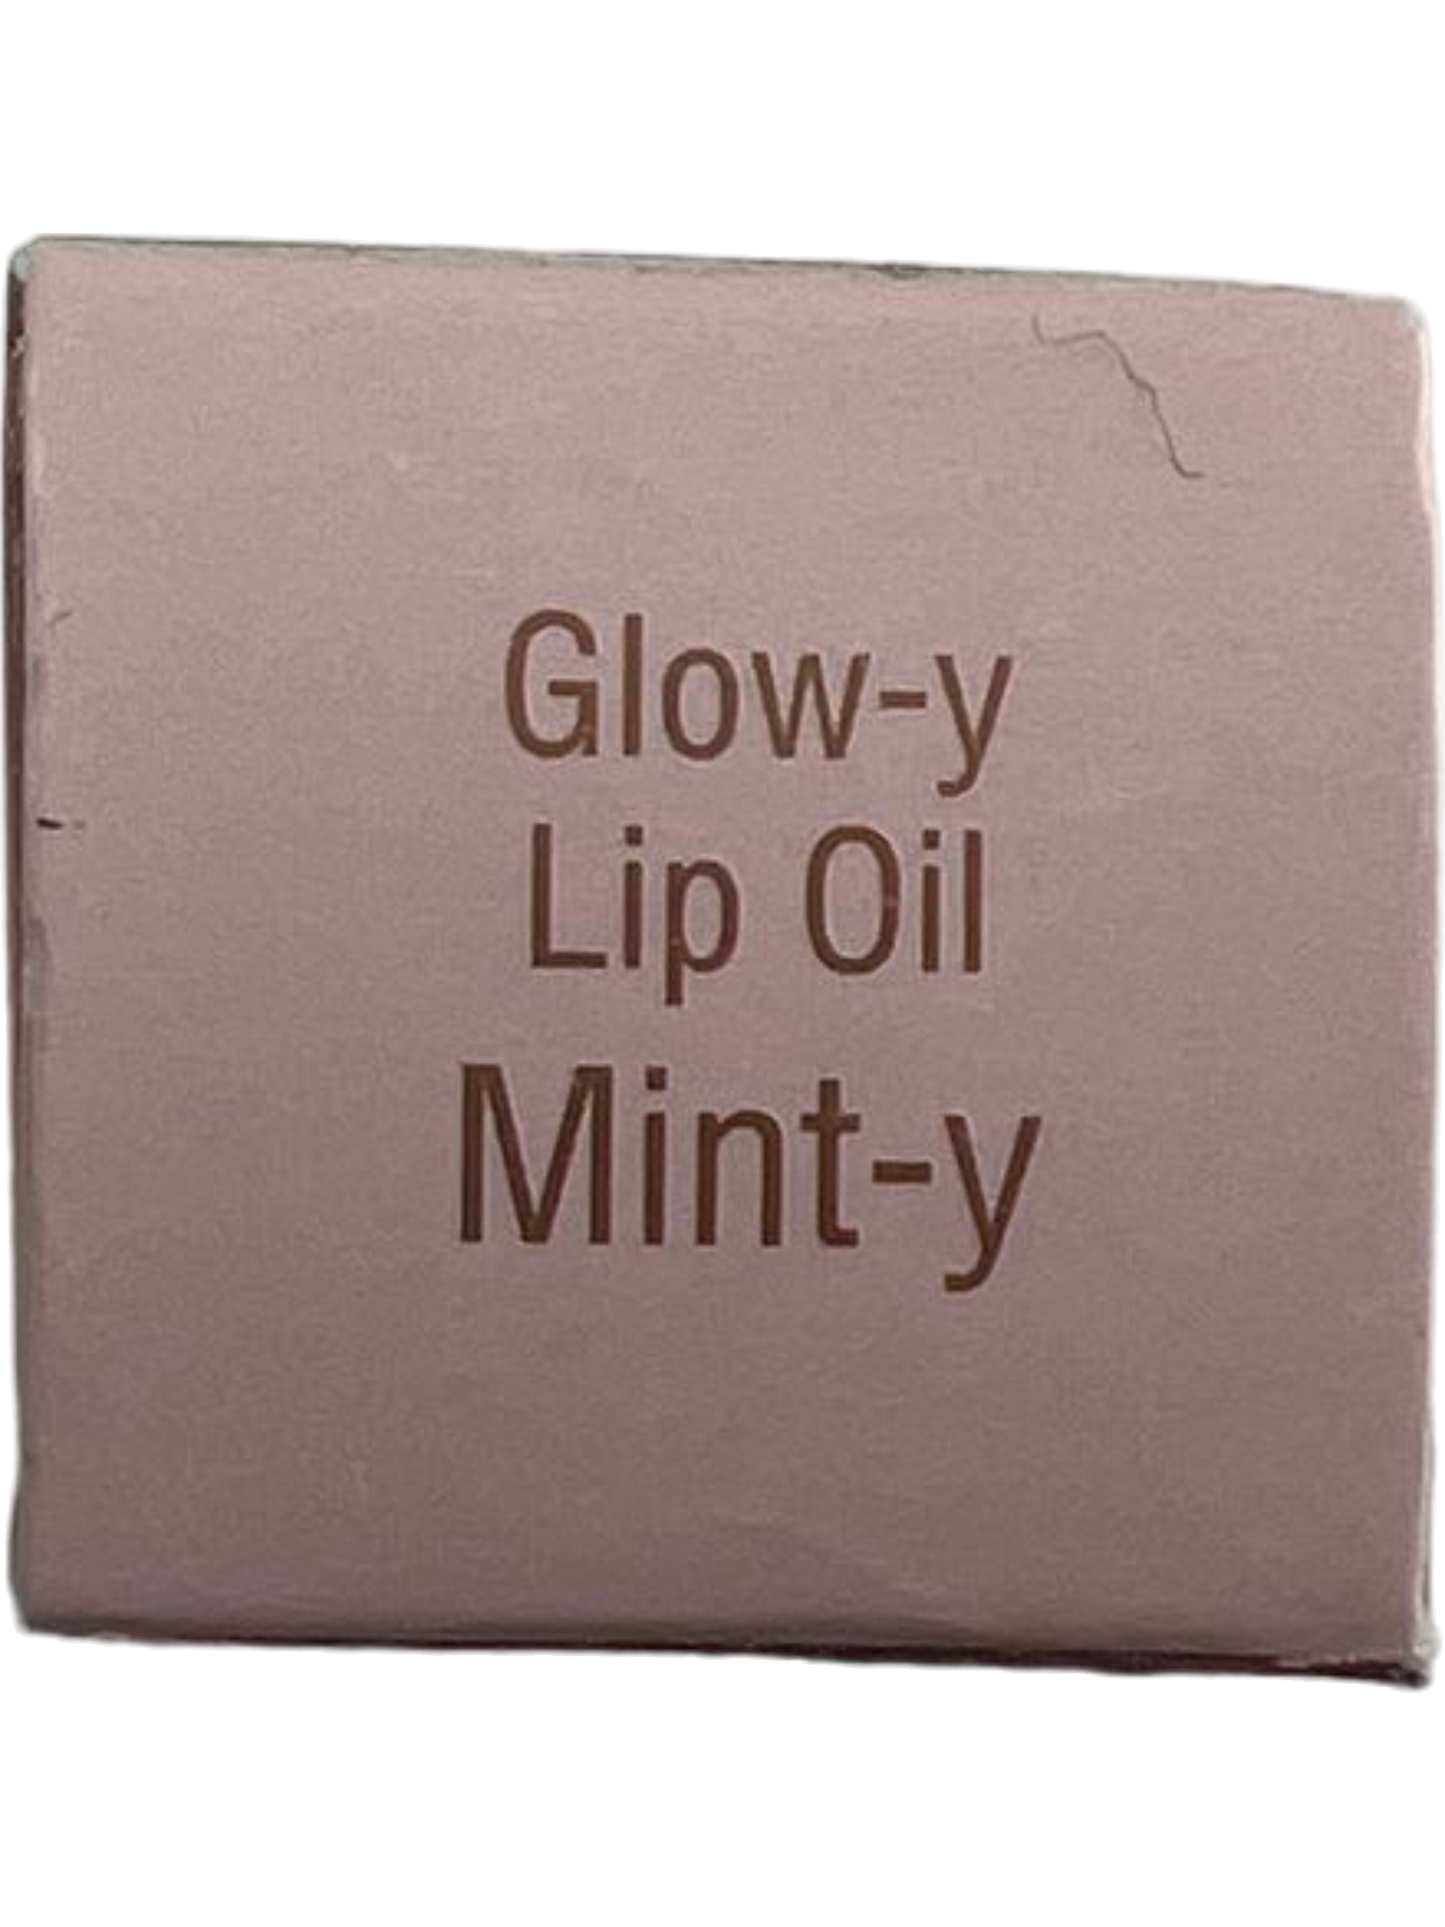 Pixi Beauty Glow-y Lip Oil Mint-y 0.19 Oz (5.5g) Conditioning Silky Nourishing